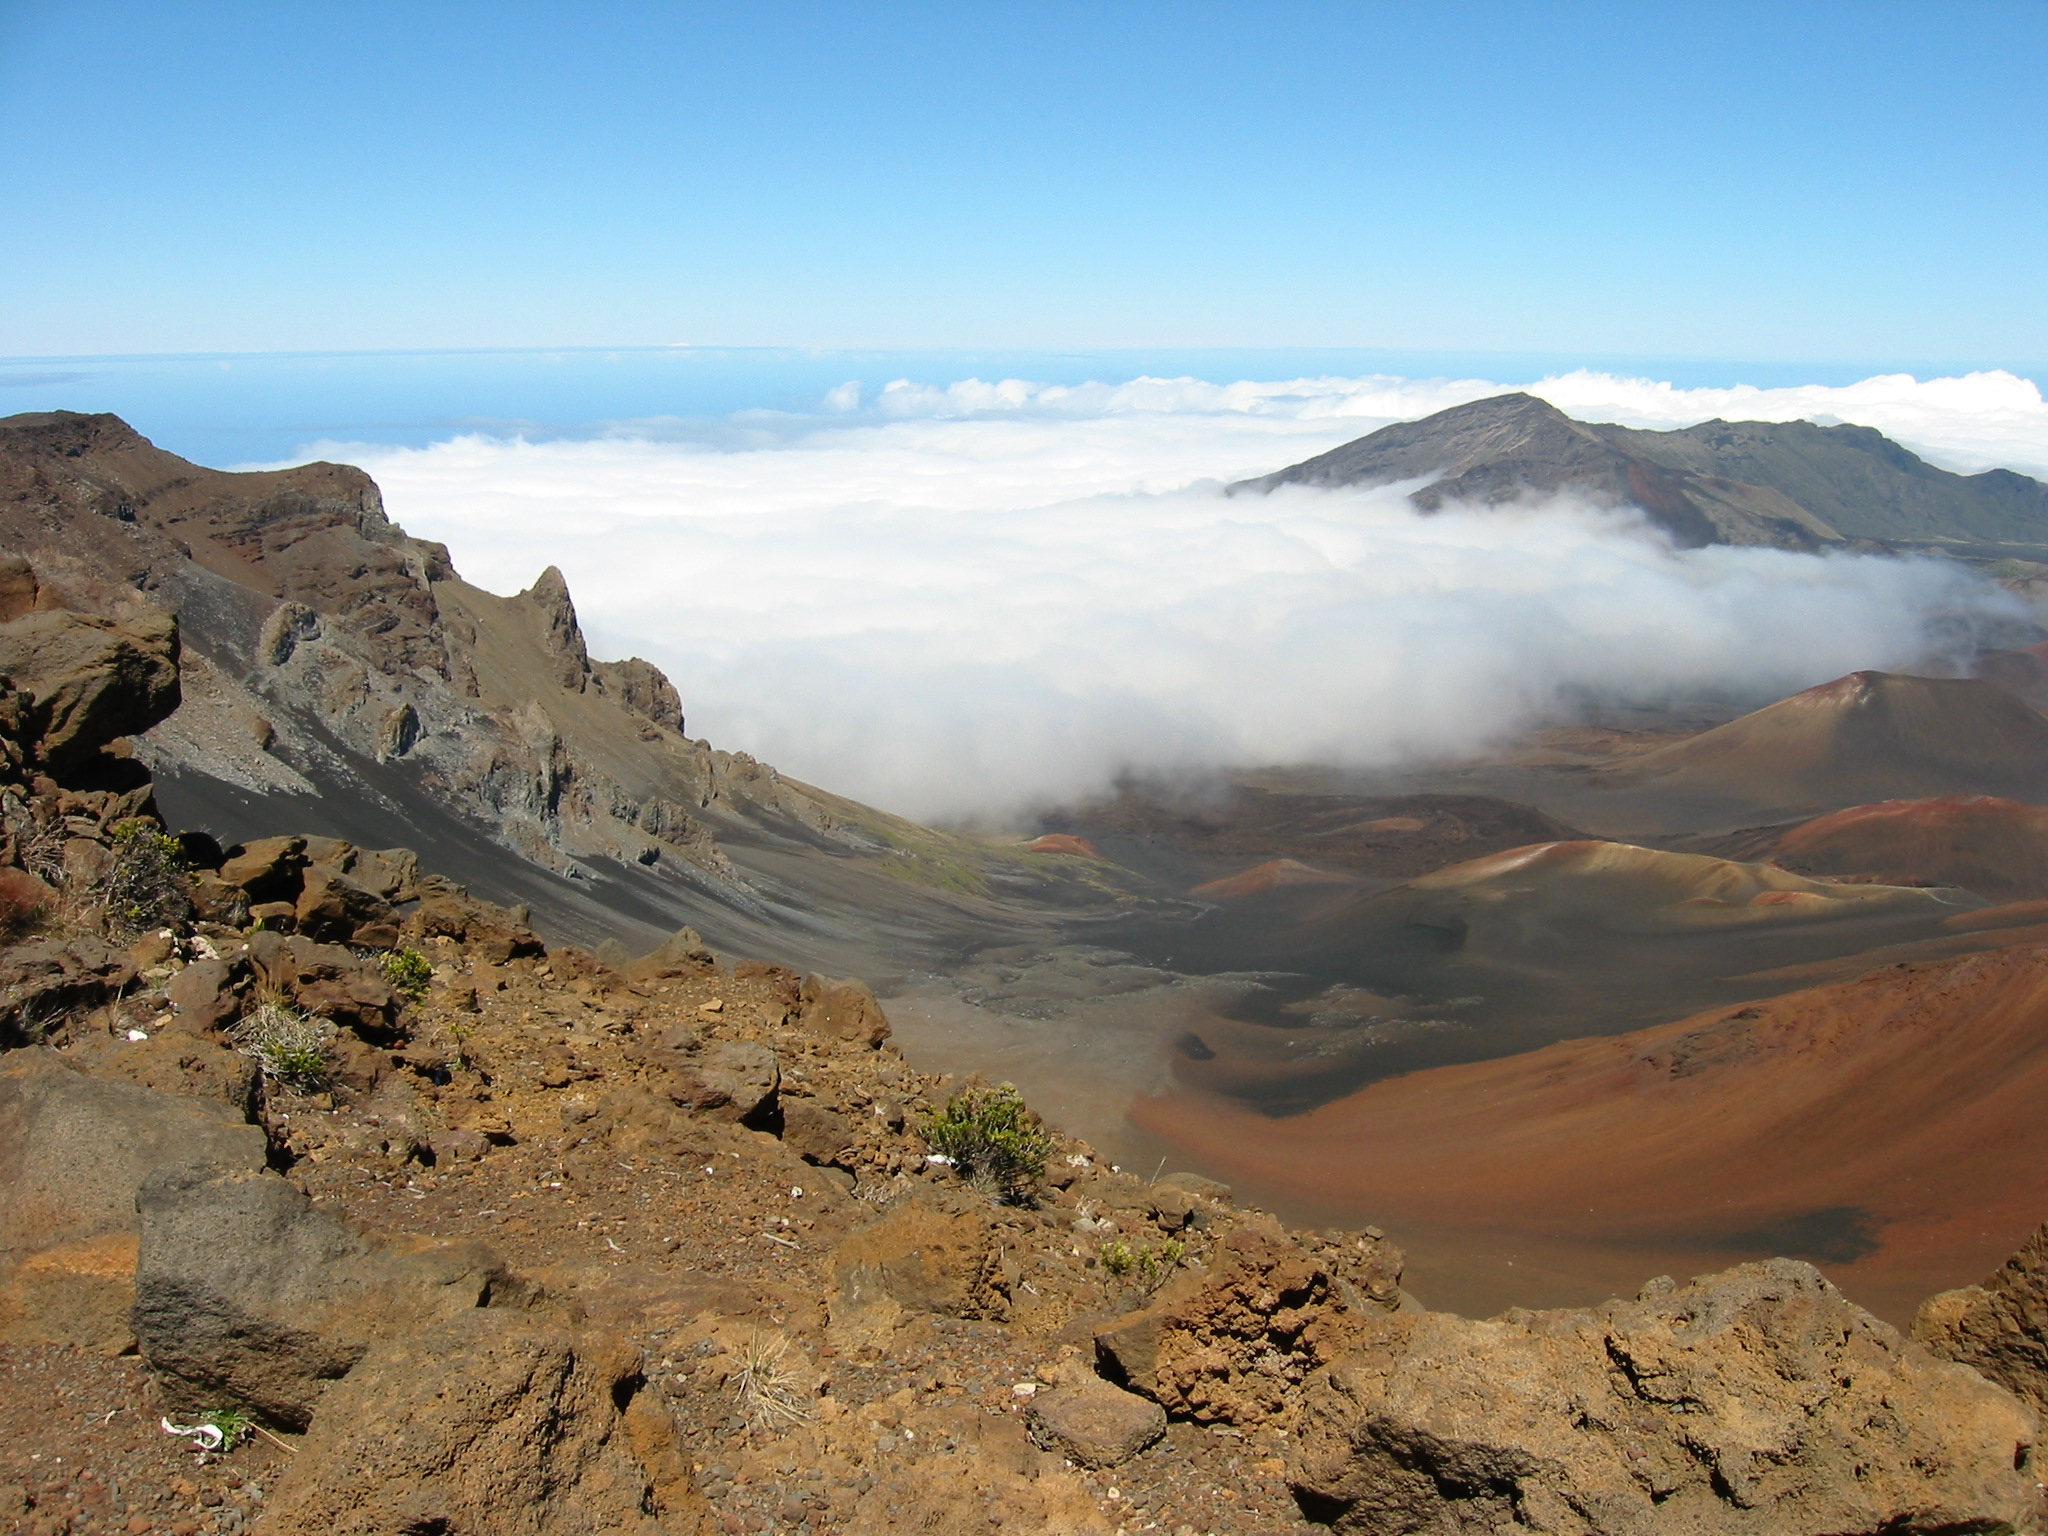 Mount Haleakala